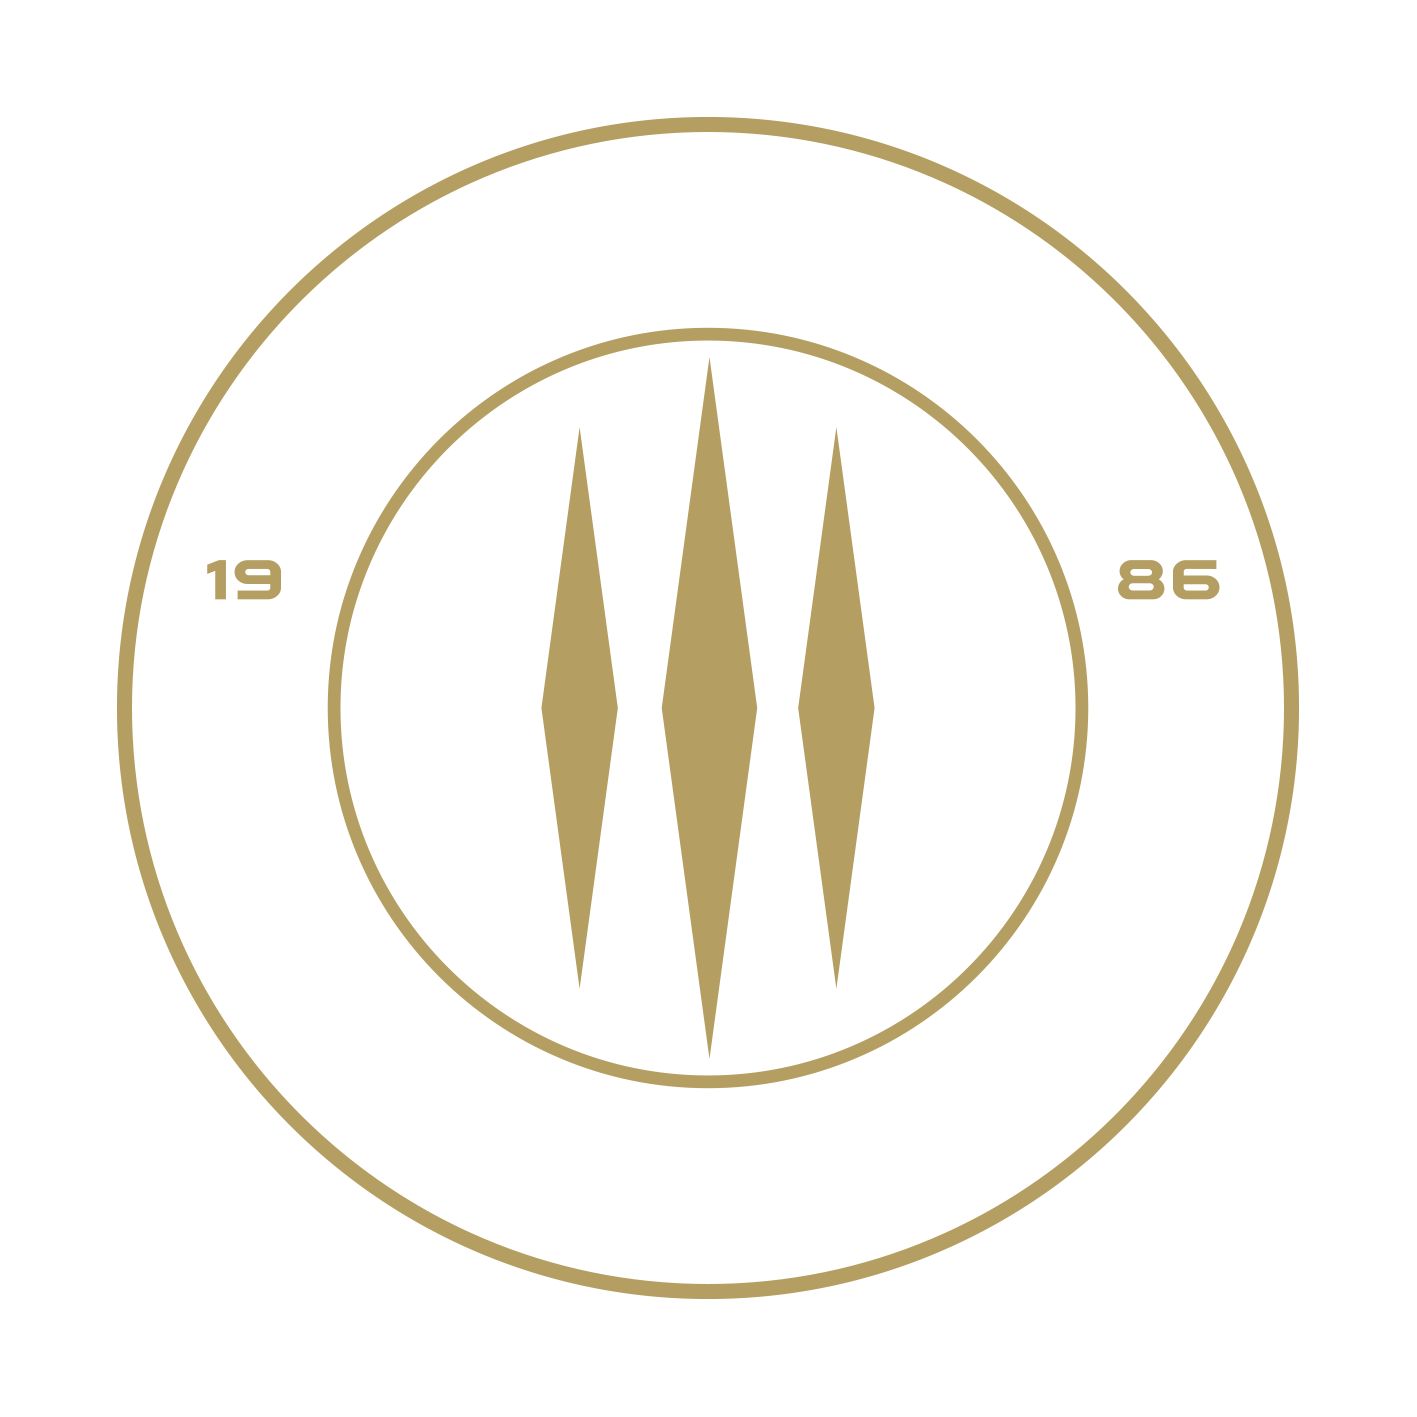 salon triathlon